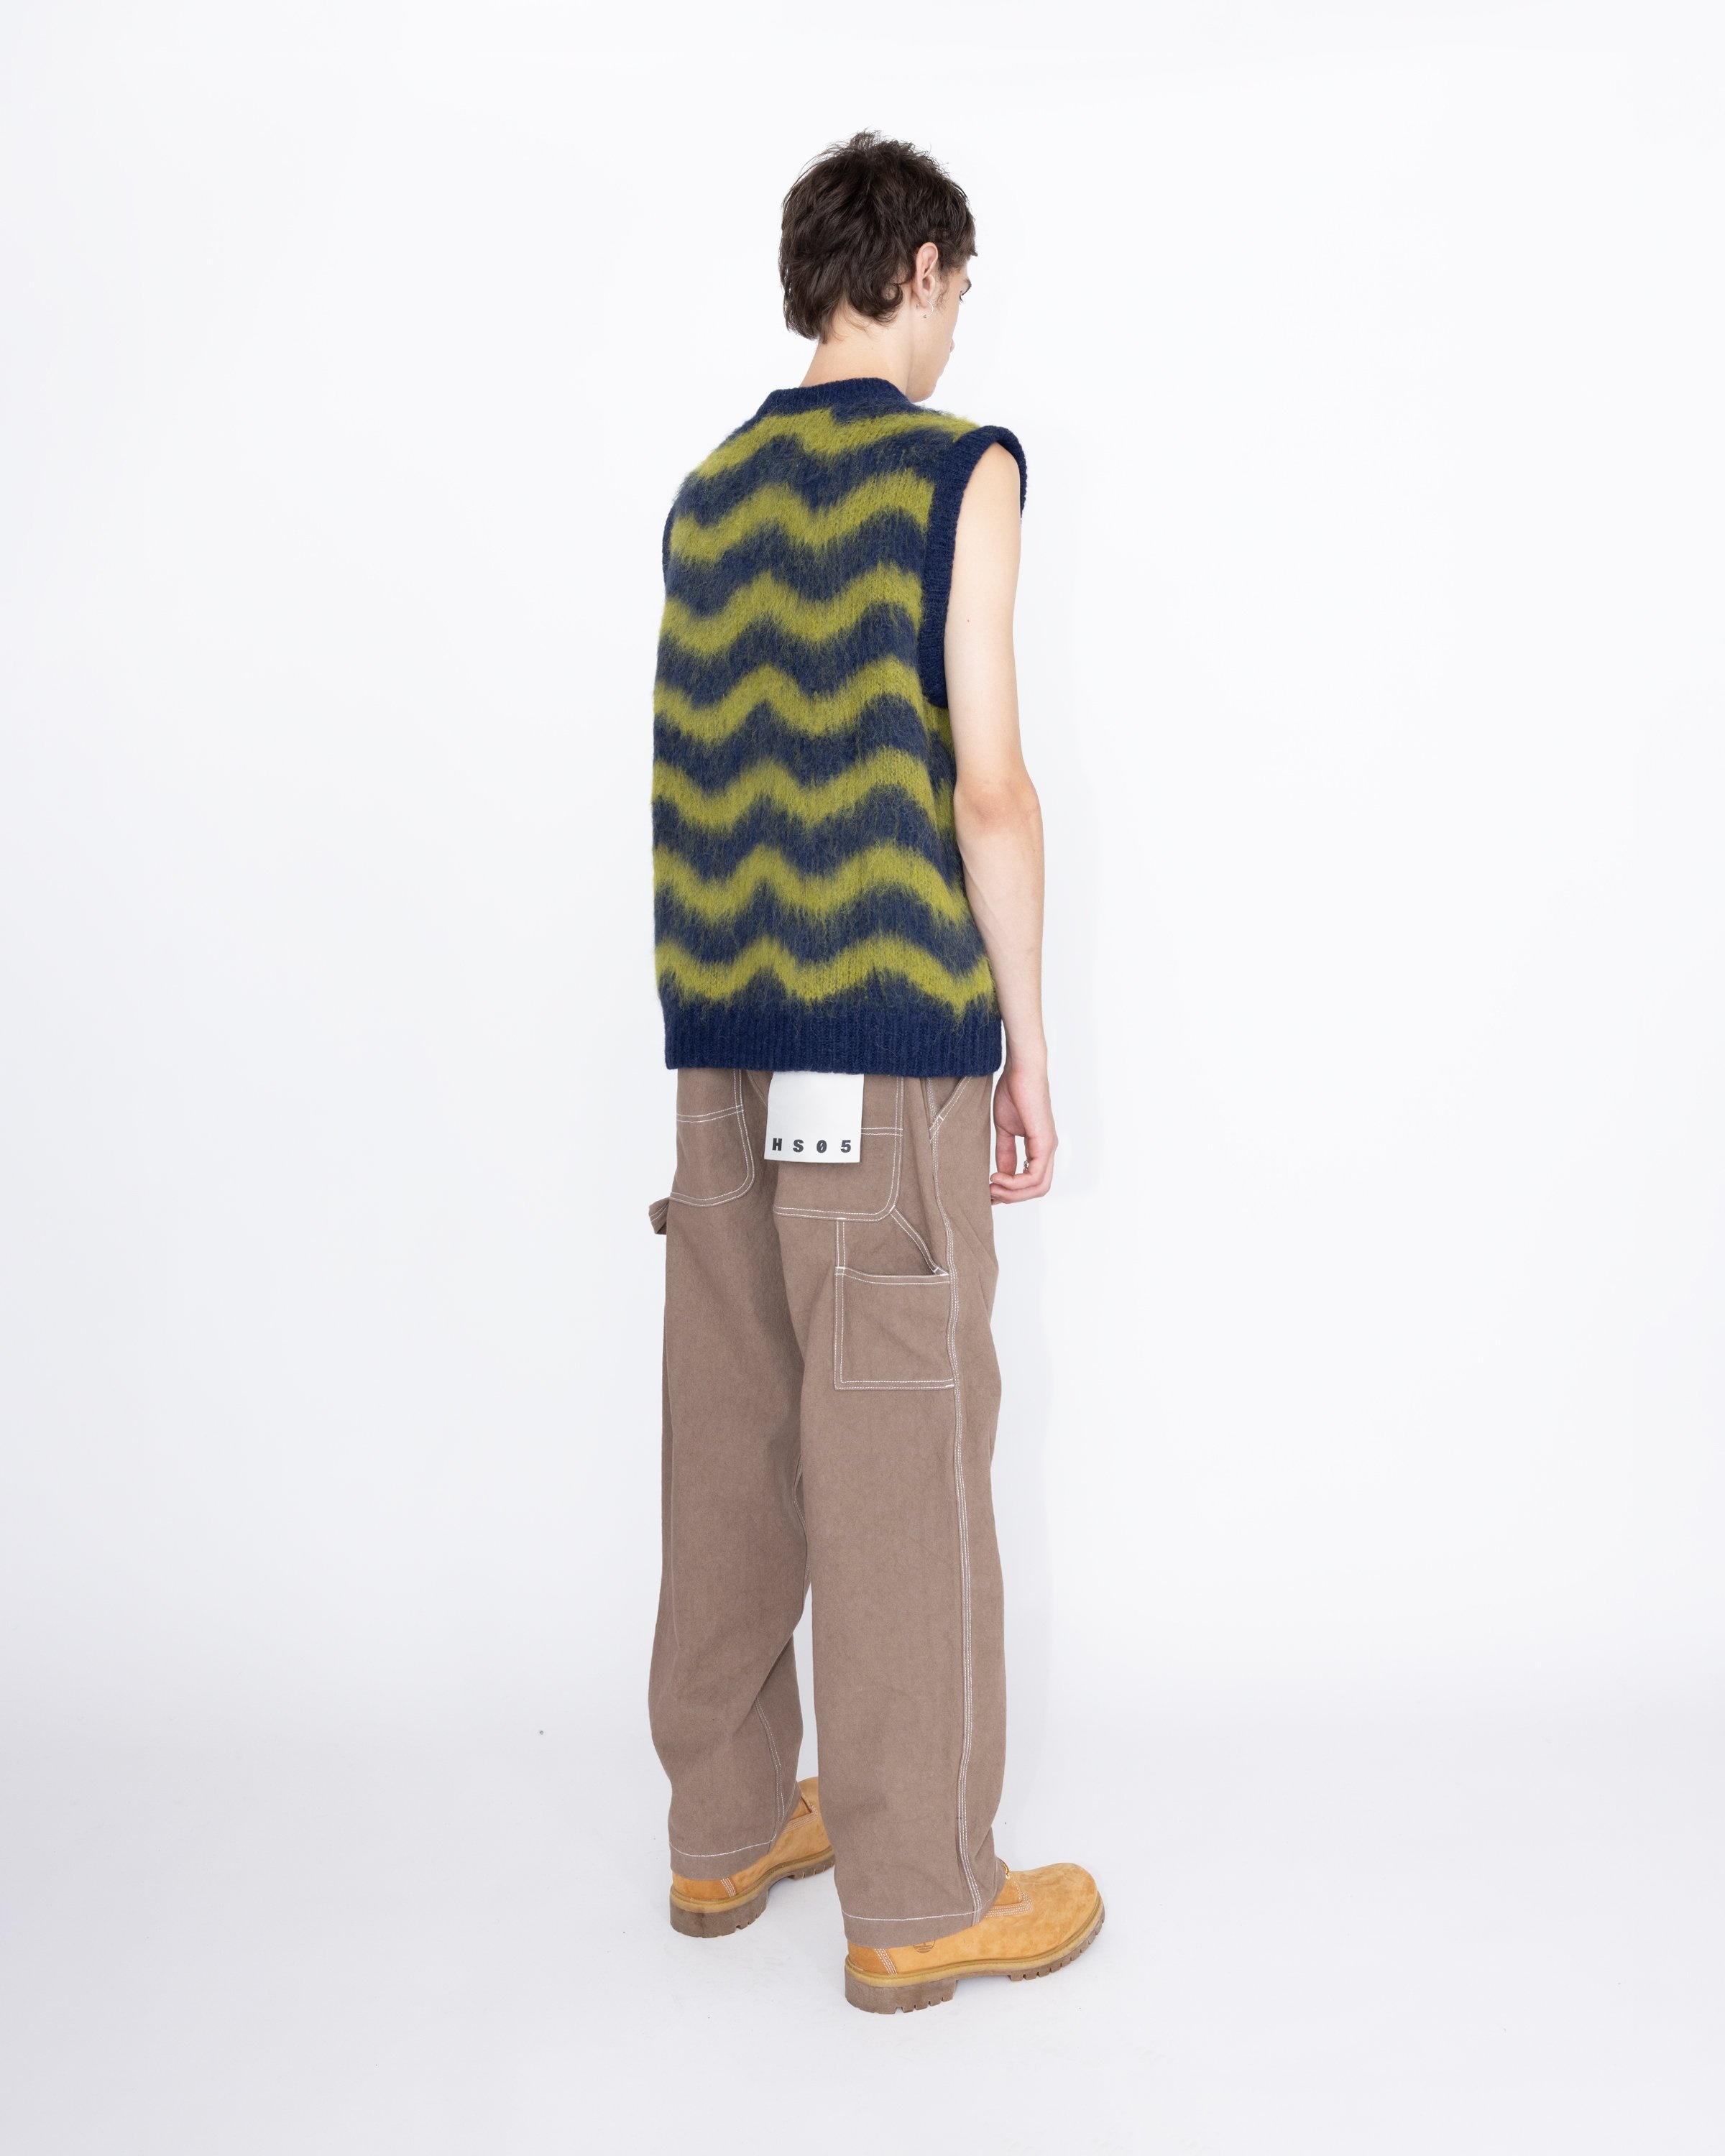 Highsnobiety HS05 – Alpaca Fuzzy Wave Sweater Vest Navy/Olive green - Knitwear - Multi - Image 5